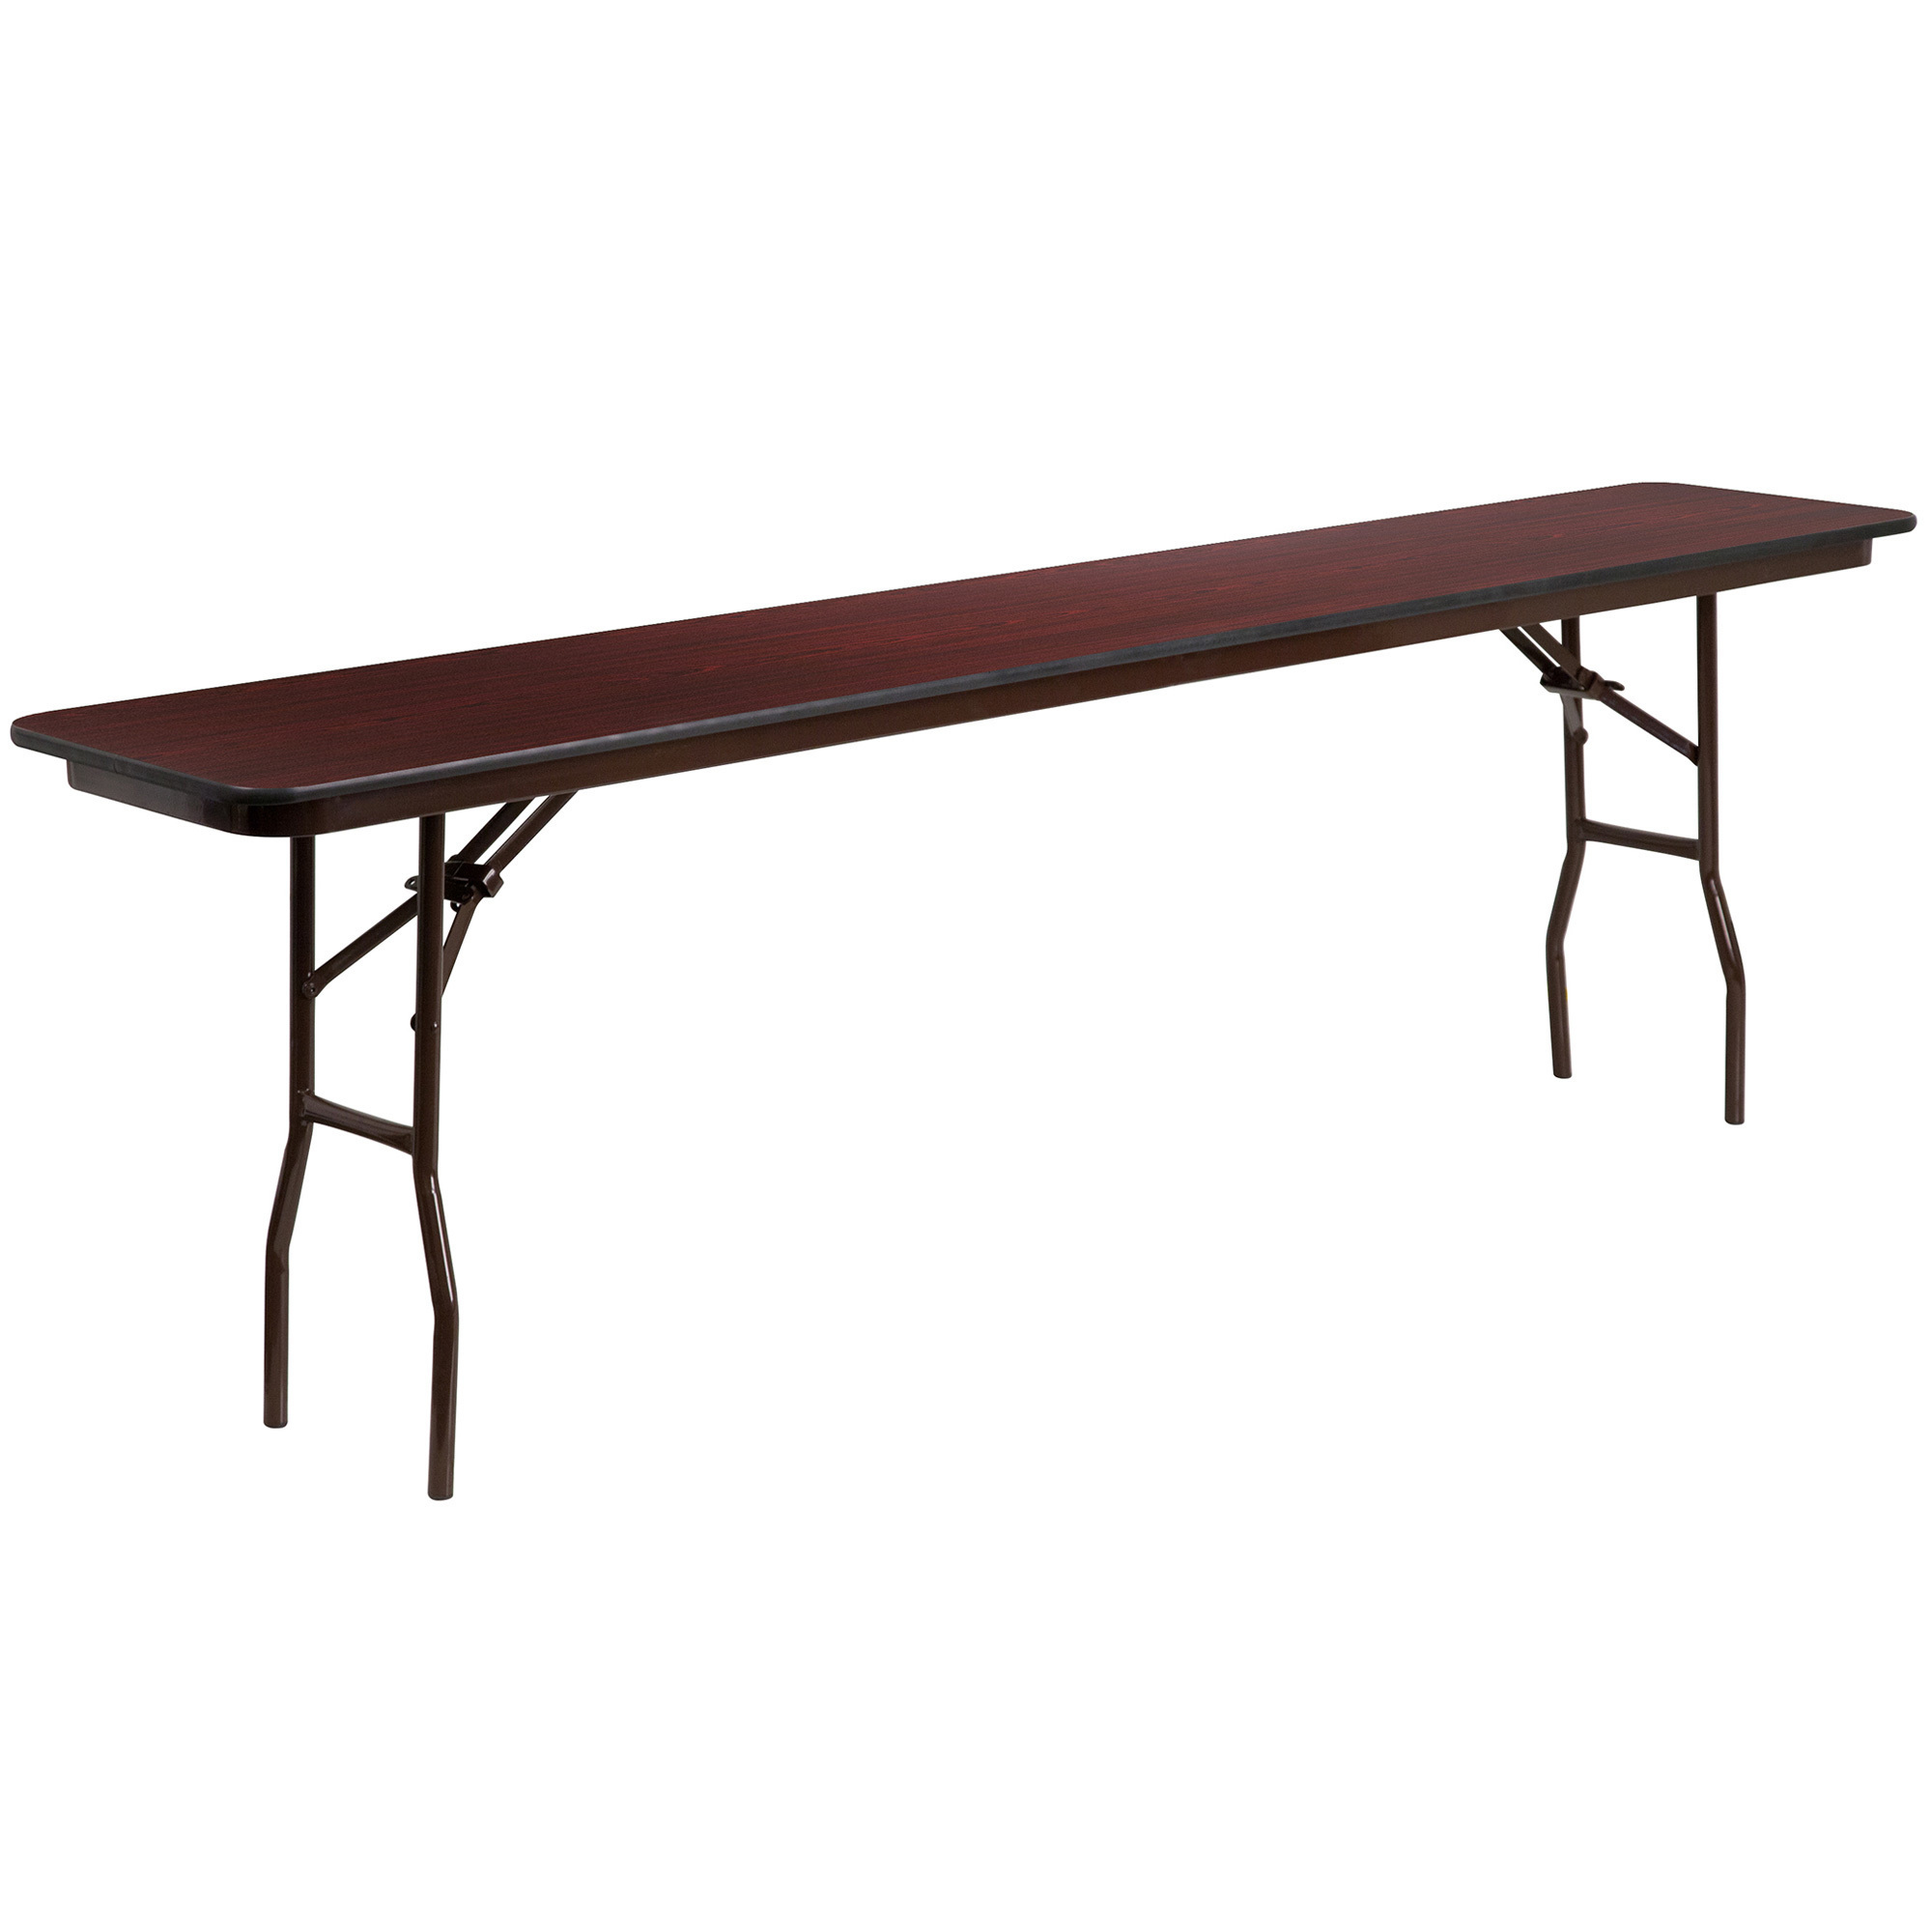 Rectangular Training Table — Mahogany Melamine Laminate Top, 96Inch L x 18Inch W x 30Inch H, Model - Flash Furniture YT1896MELWAL